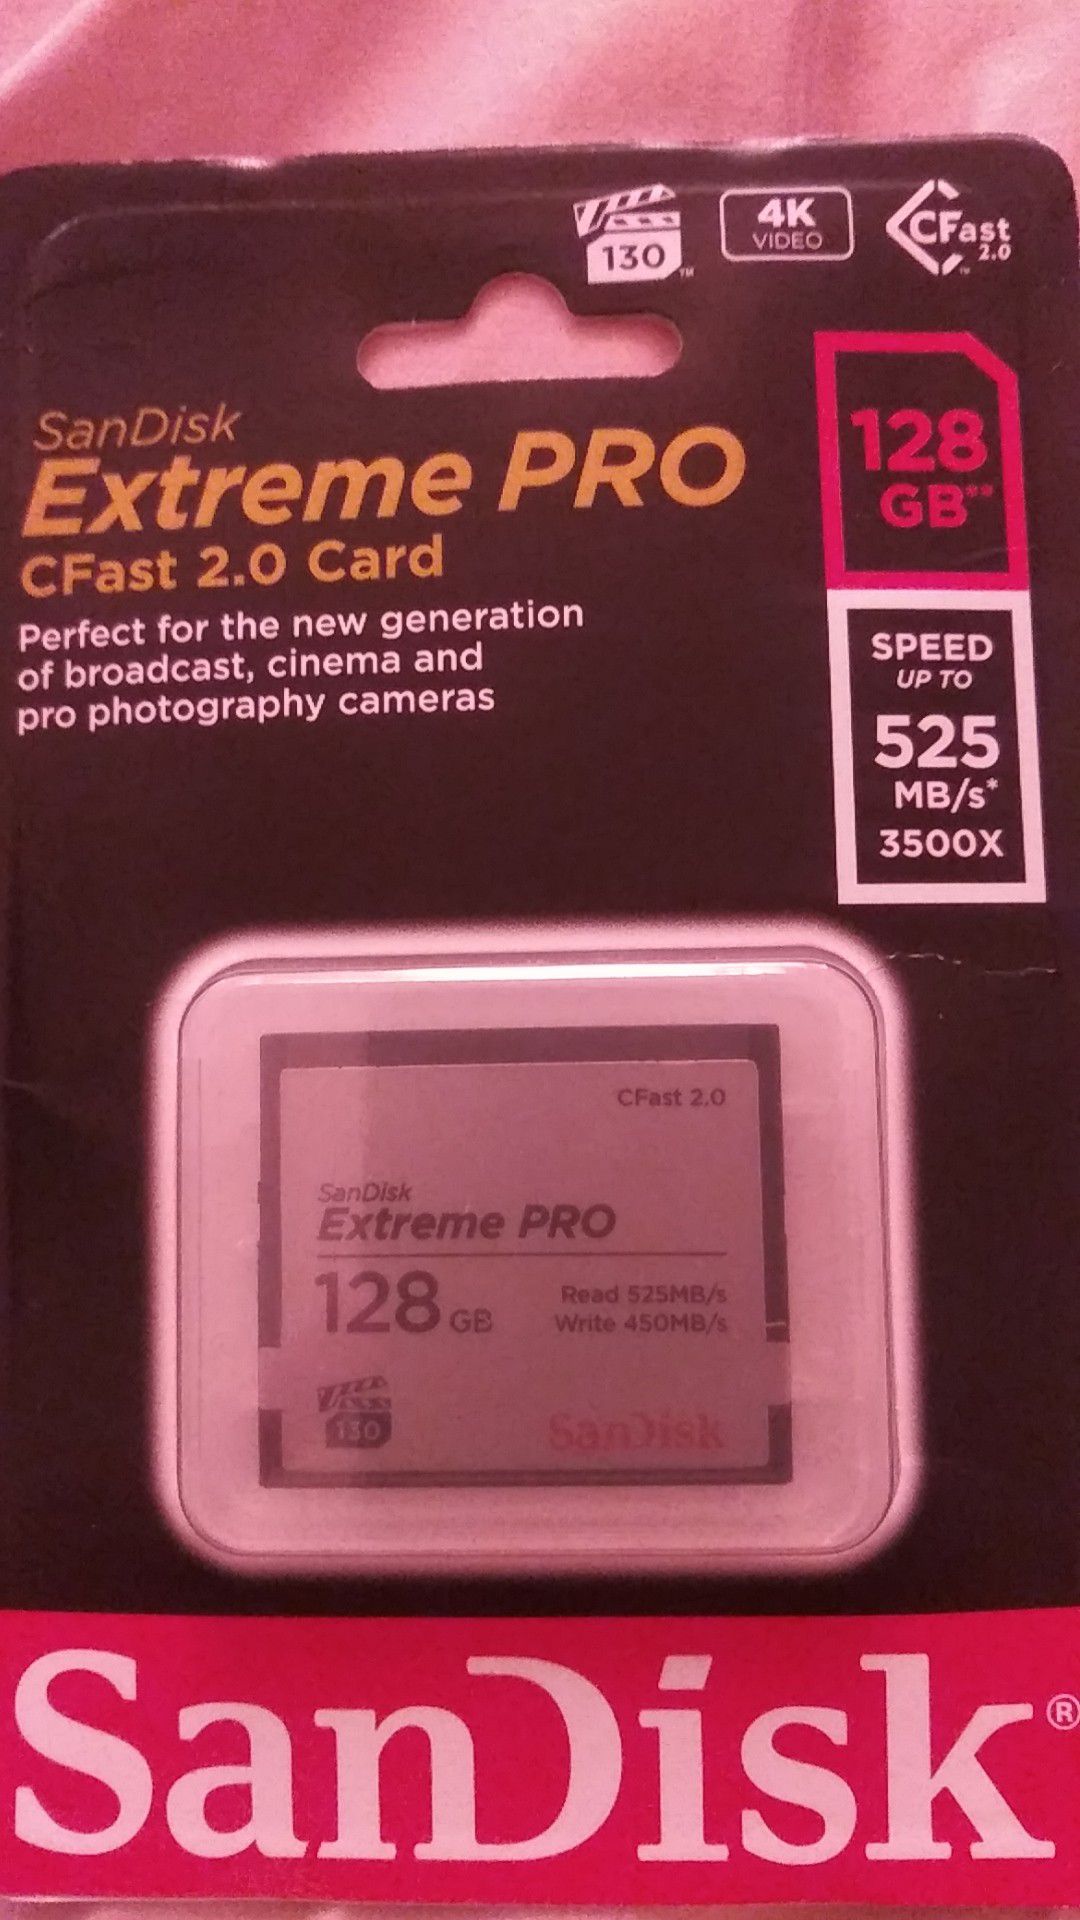 SanDisk Extreme Pro Cfast 2.0 Card